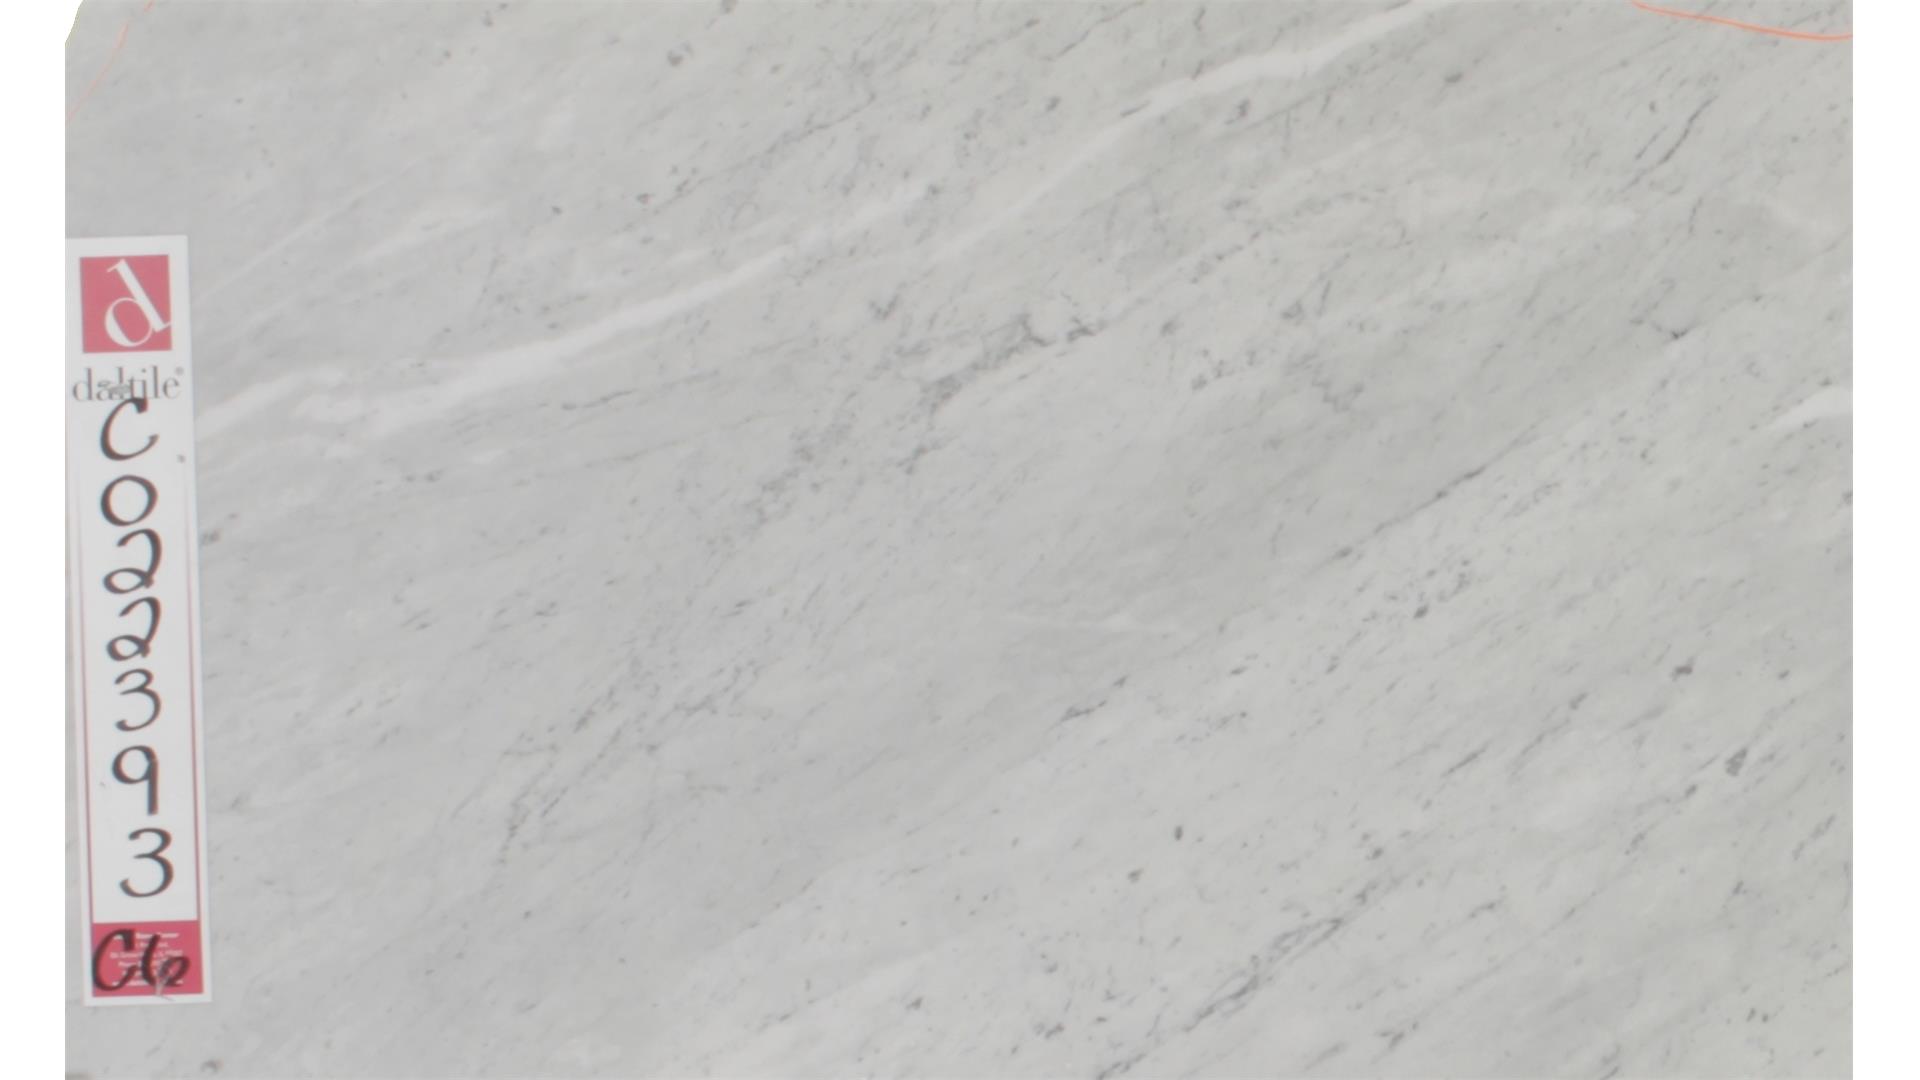 Carrera White Marble Granite Slabs